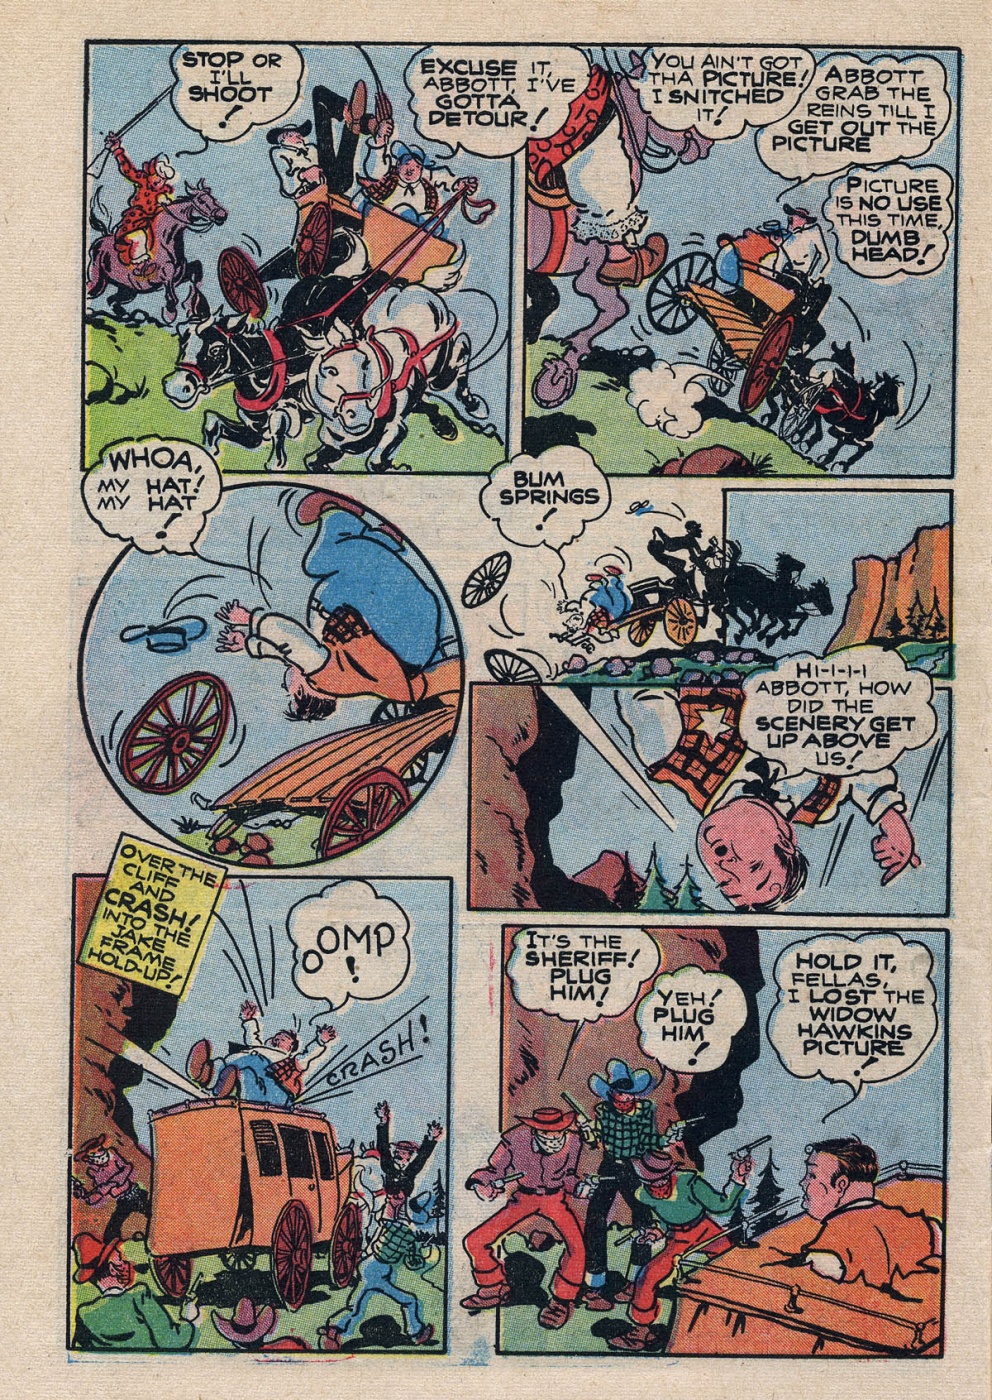 Funny Comic Strips - Abbott and Costello 001 (Feb 1948) 32